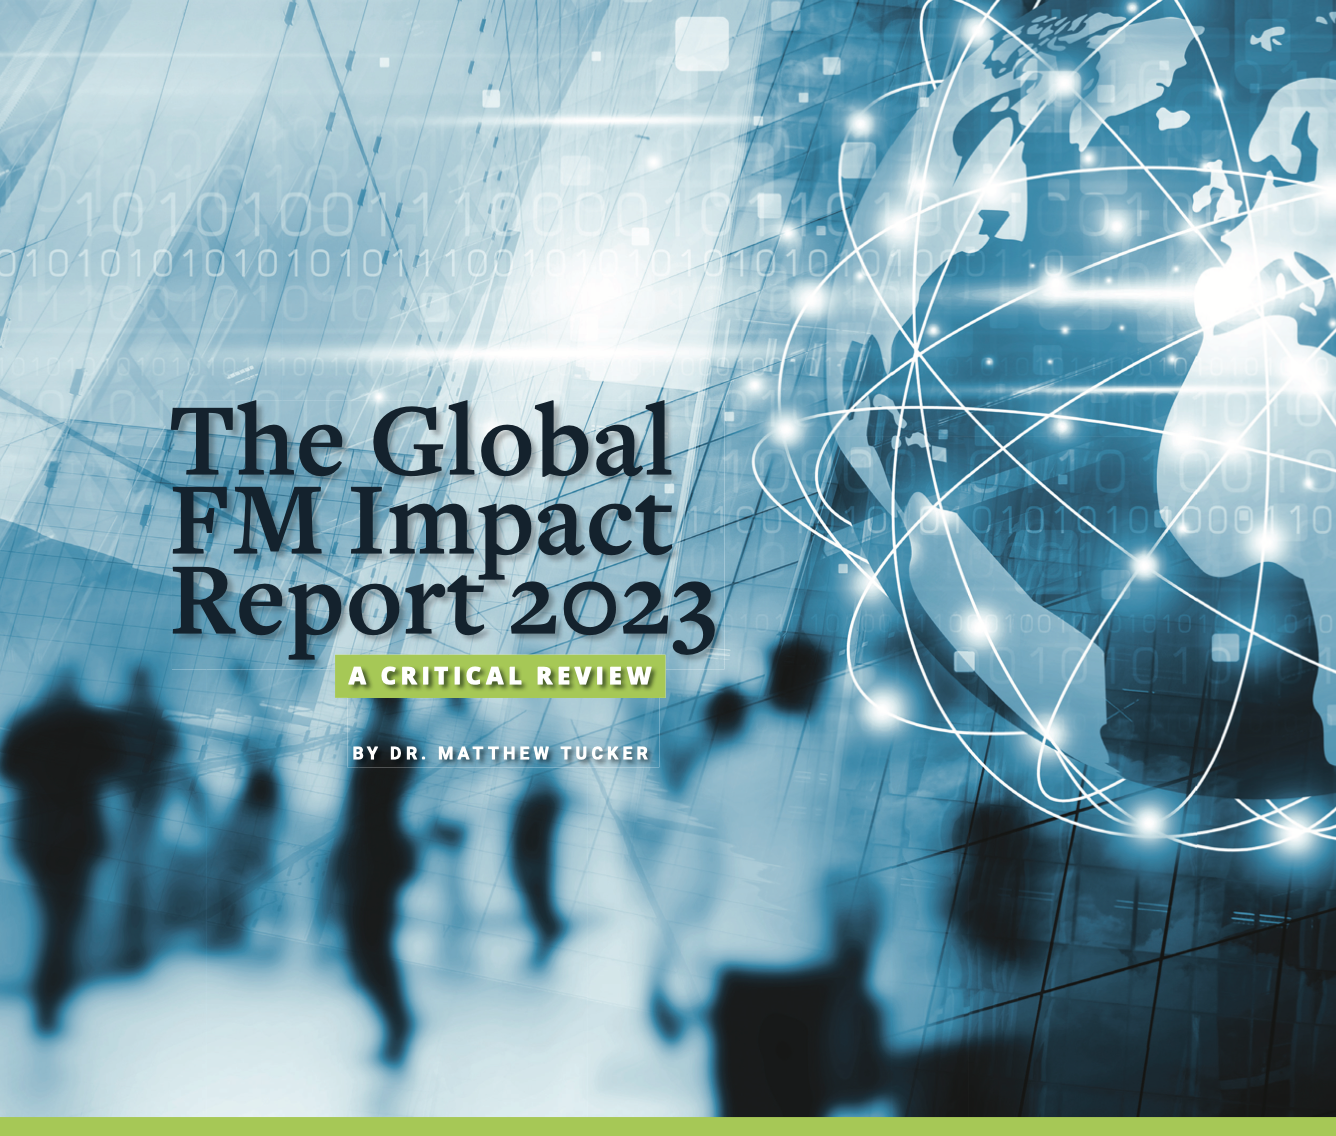 The Global FM Impact Report 2023